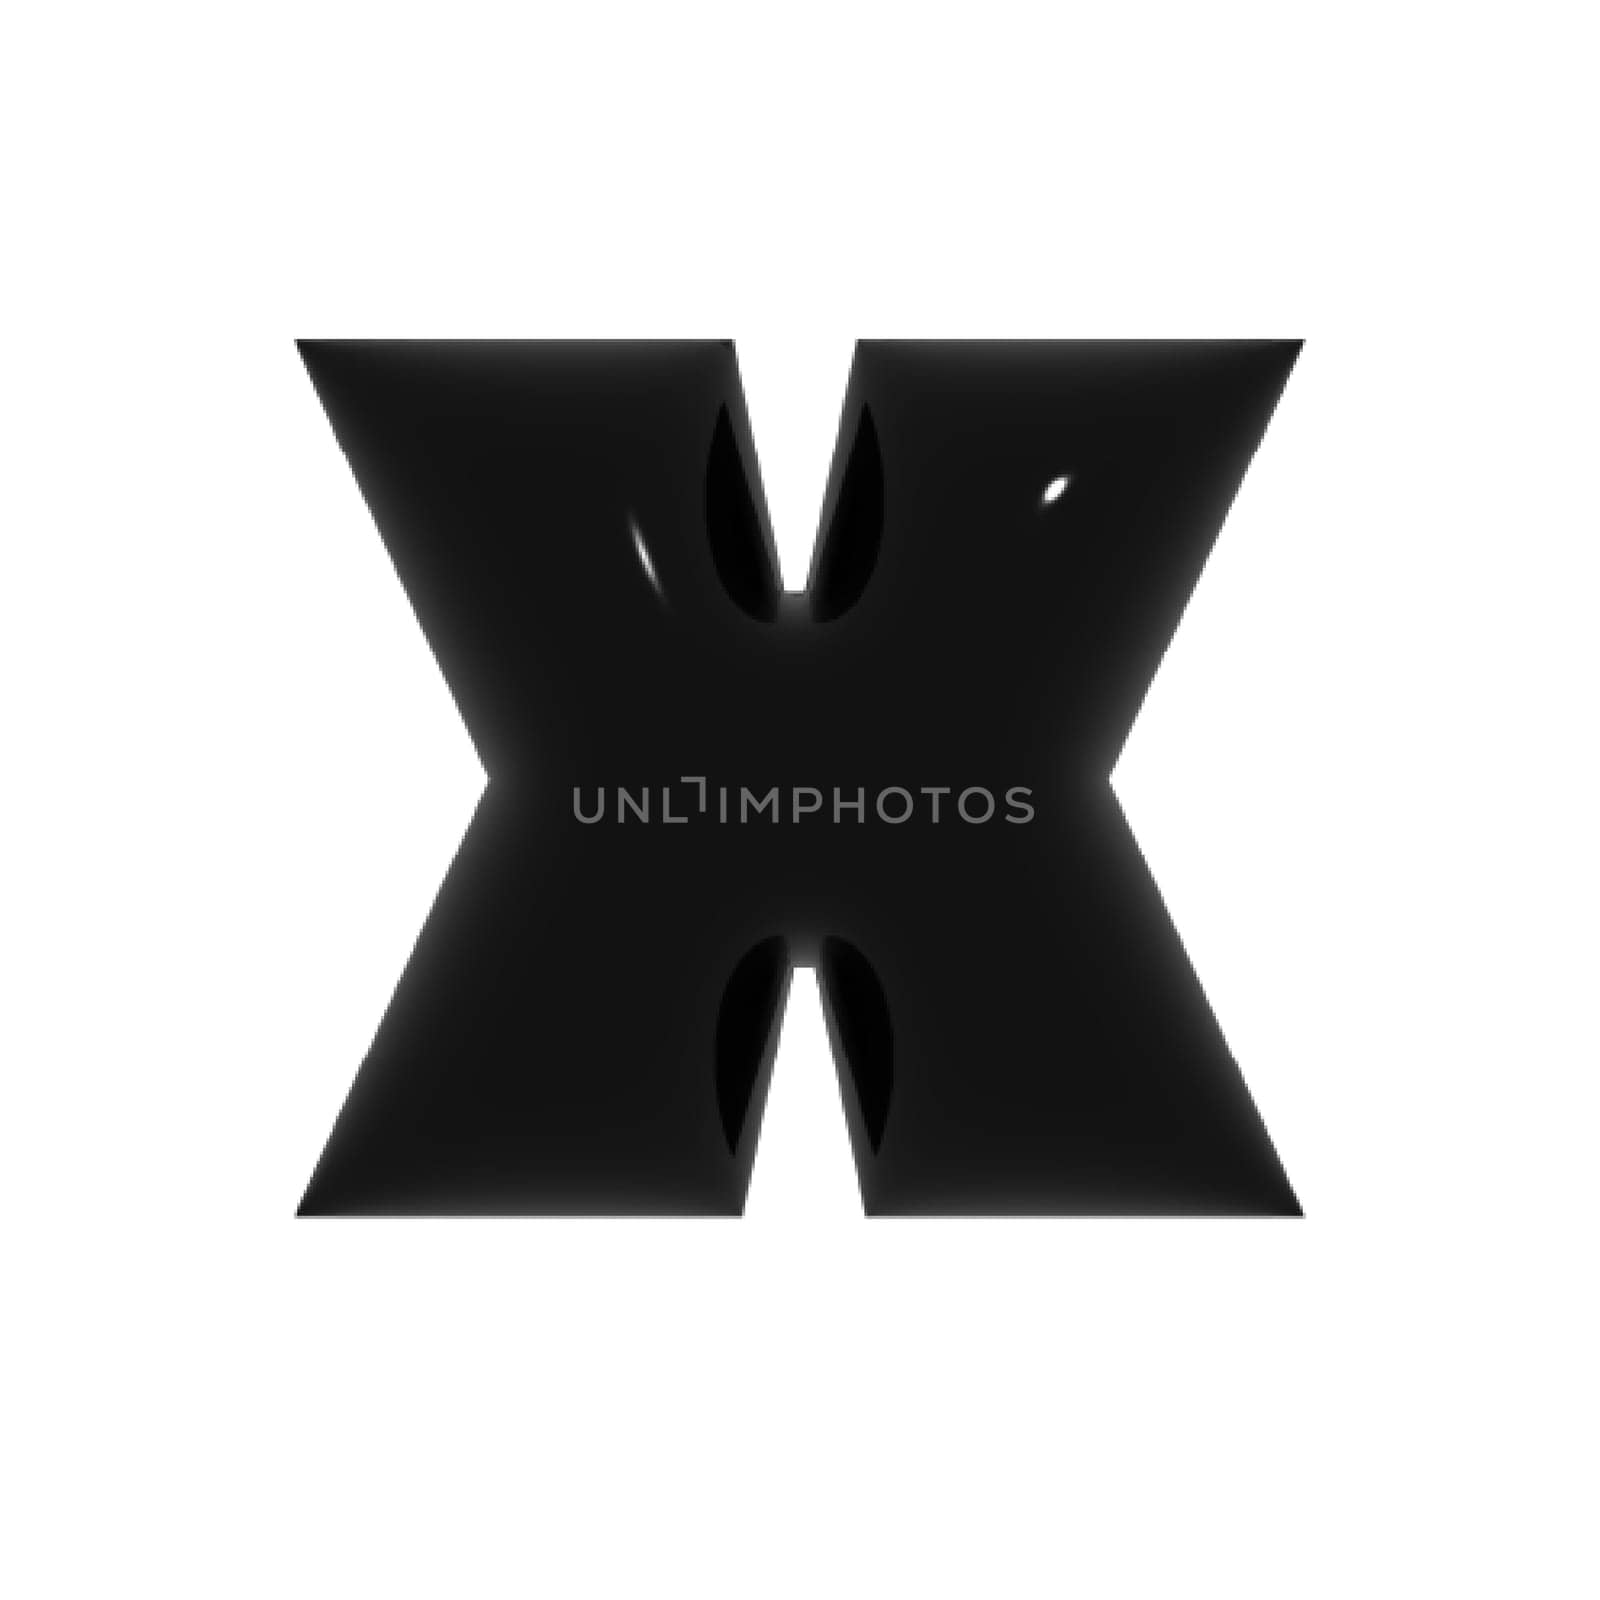 Black metal shiny reflective letter X 3D illustration by Dustick